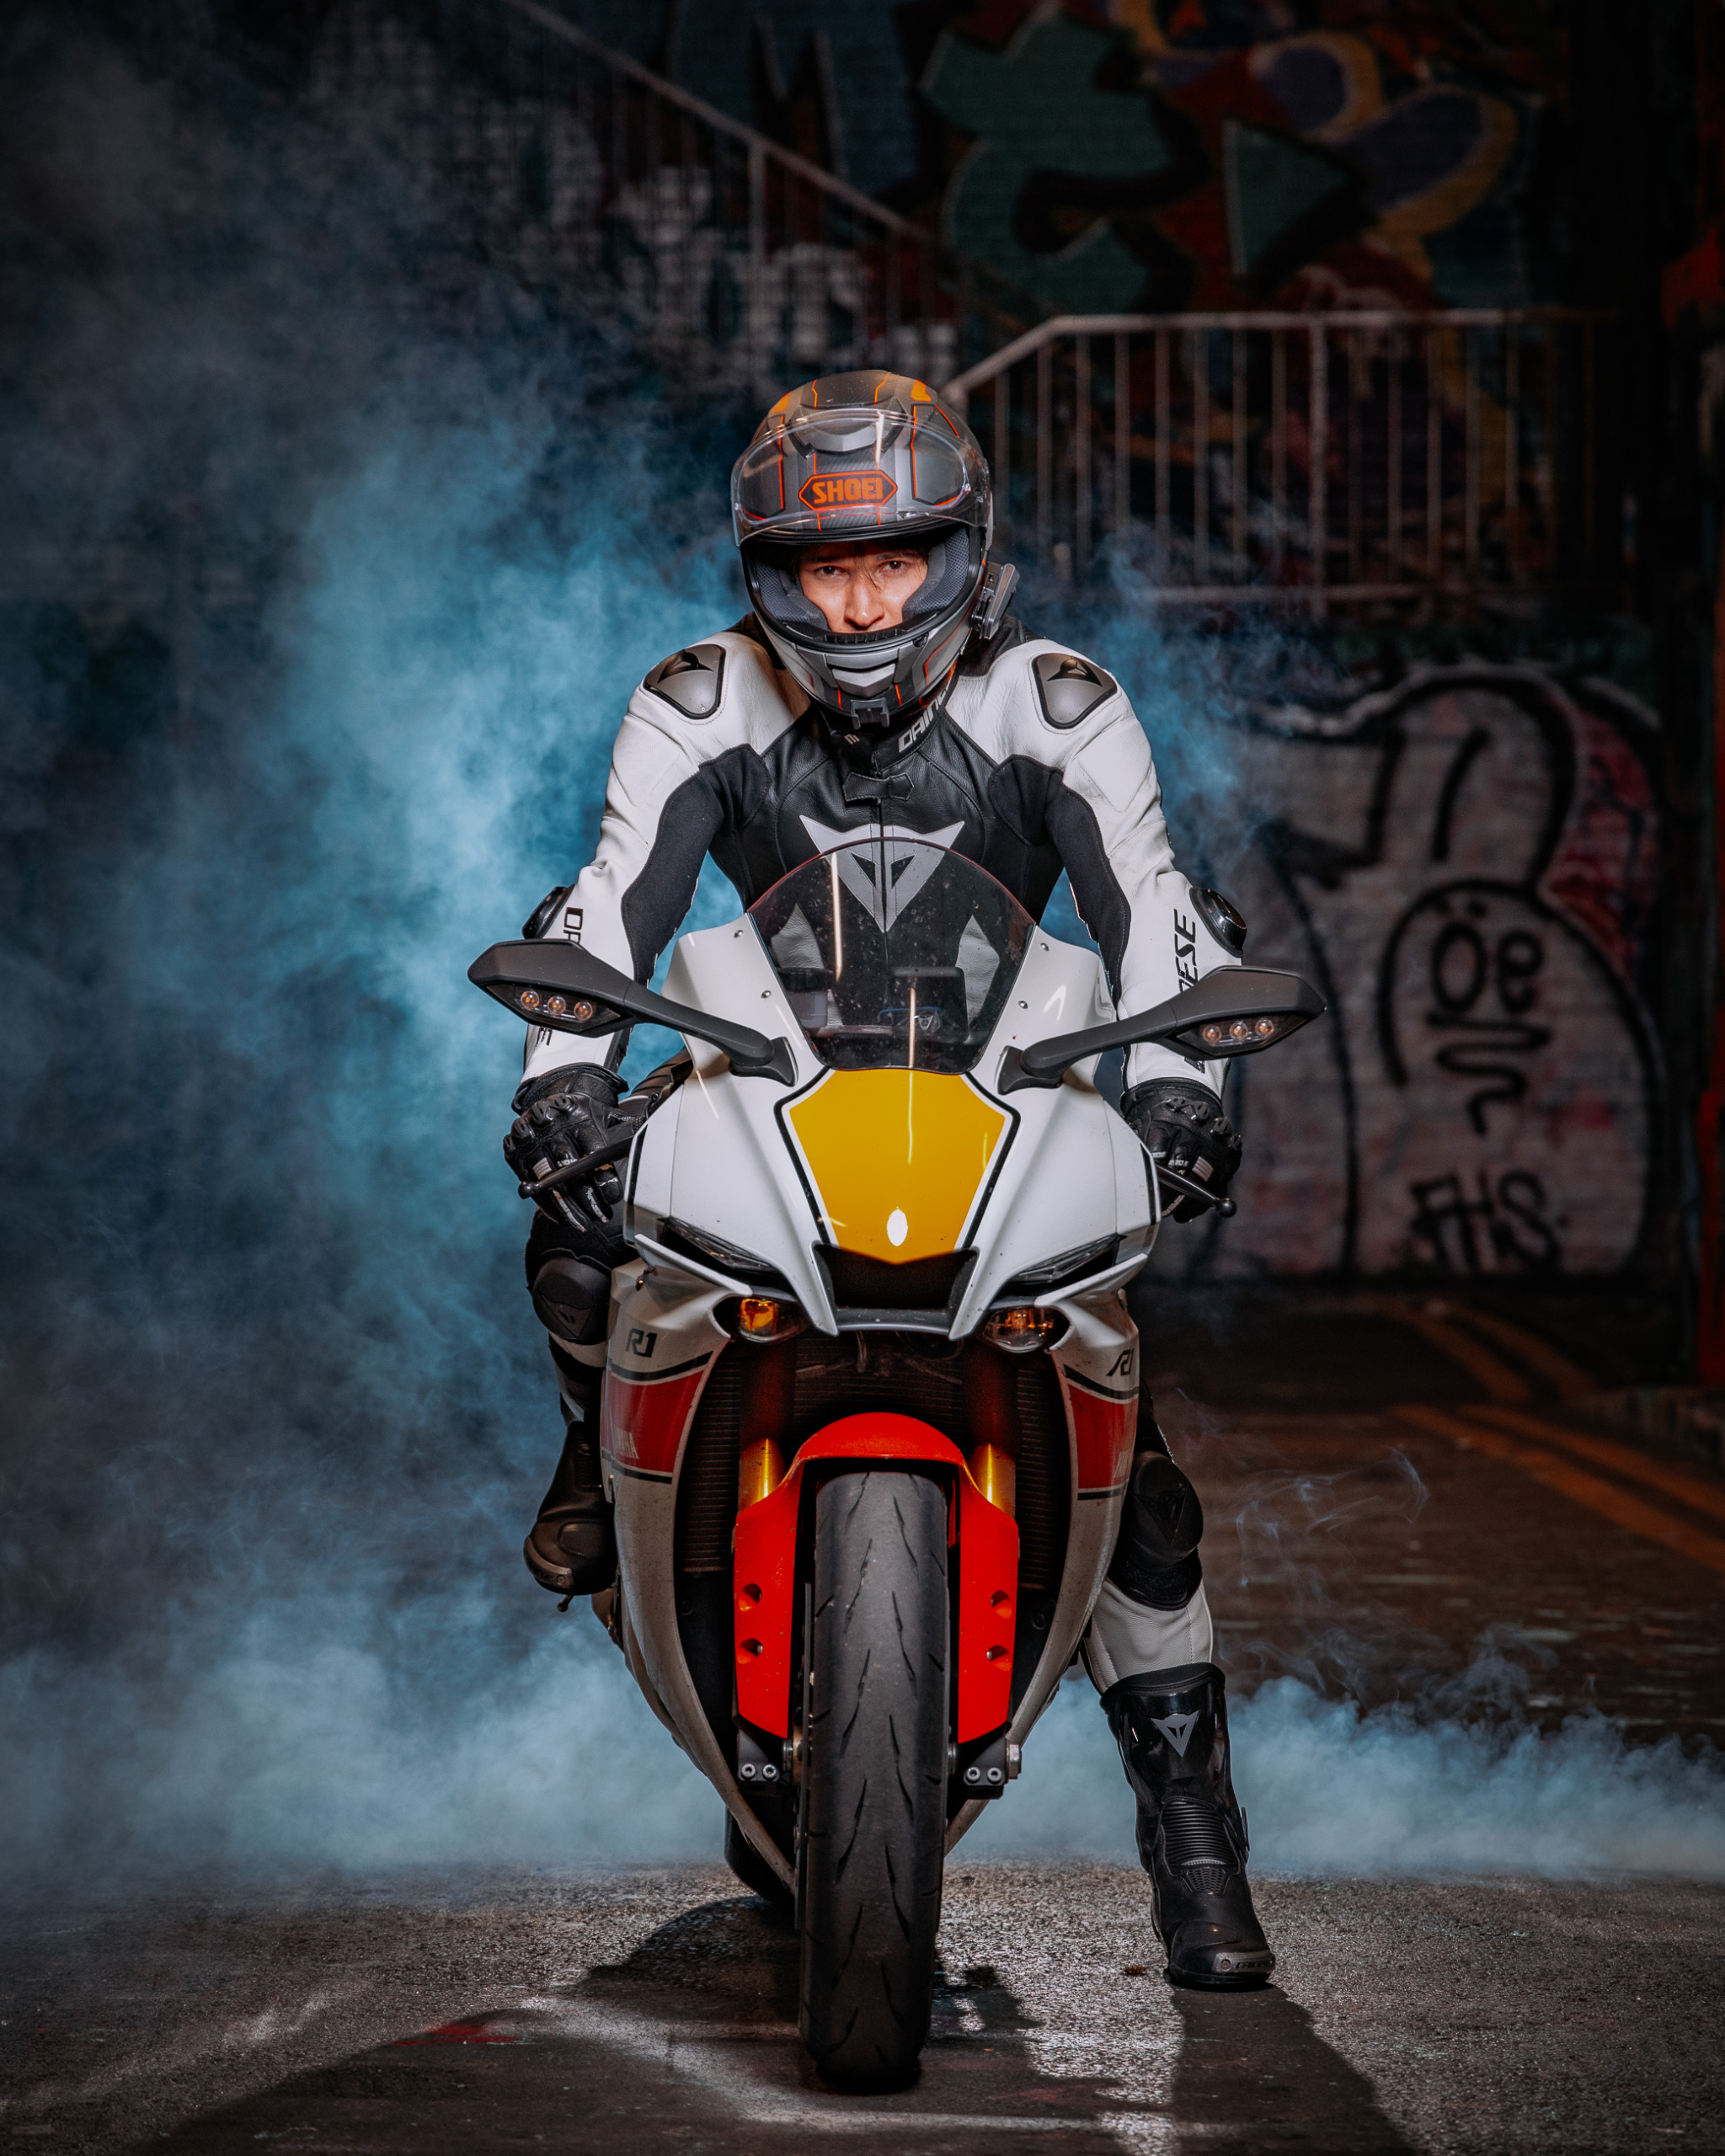 Creative Motorcycle Photoshoot in Graffiti Tunnel